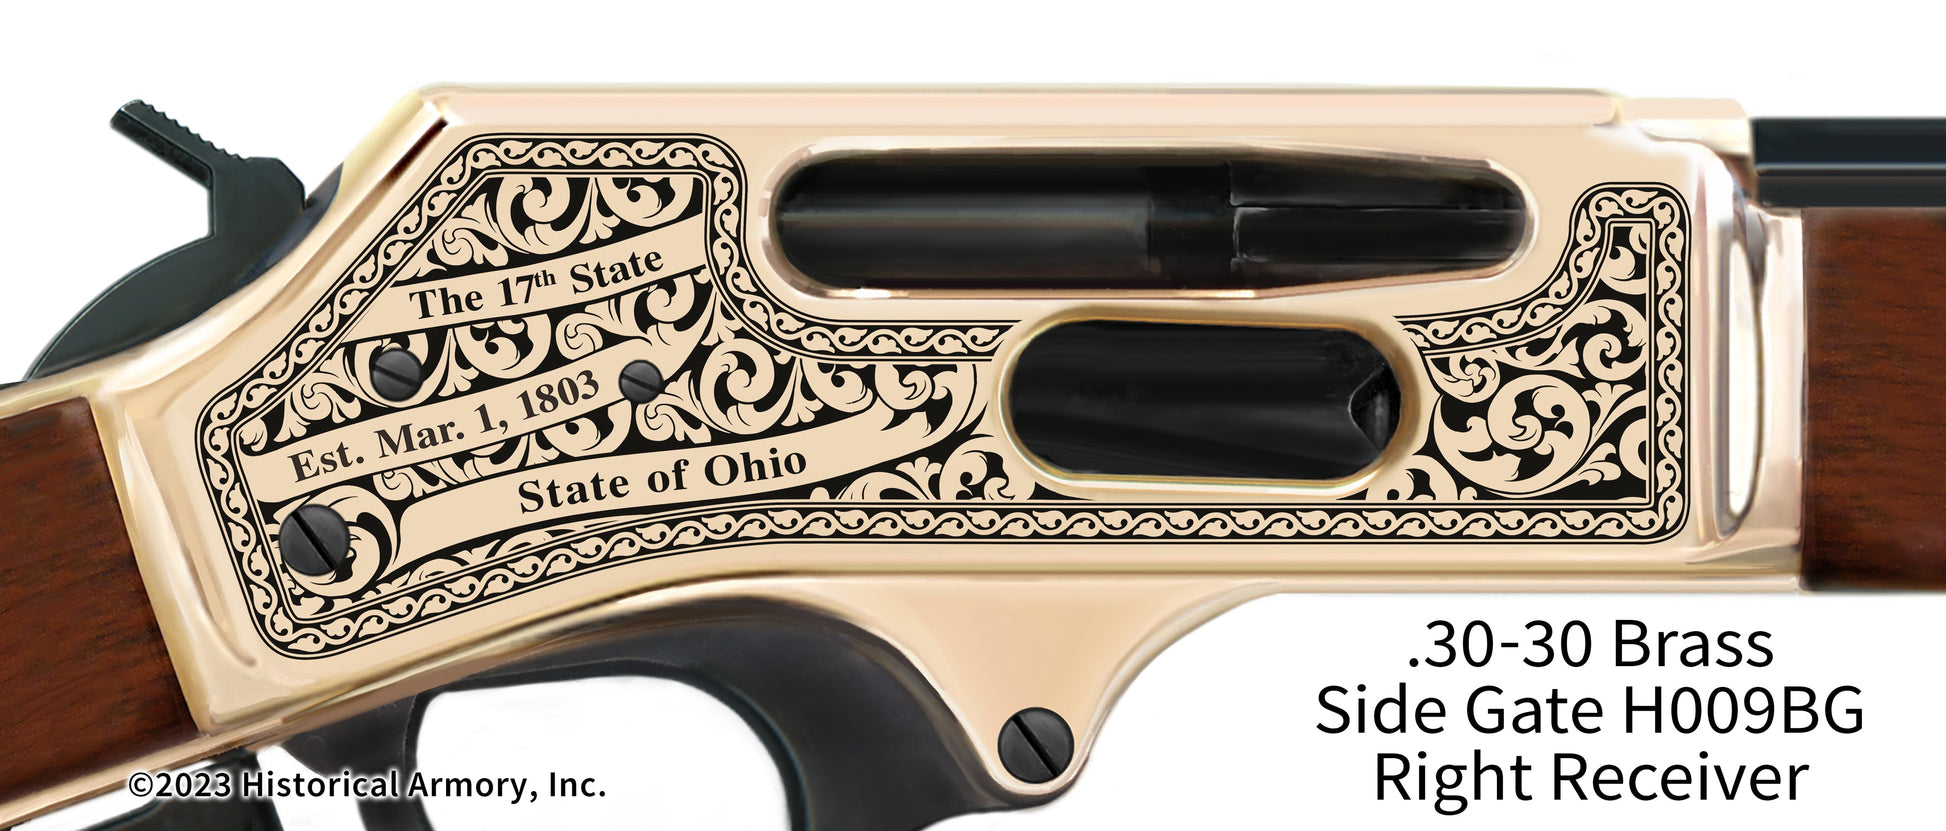 Jackson County Ohio Engraved Henry .30-30 Brass Side Gate Rifle